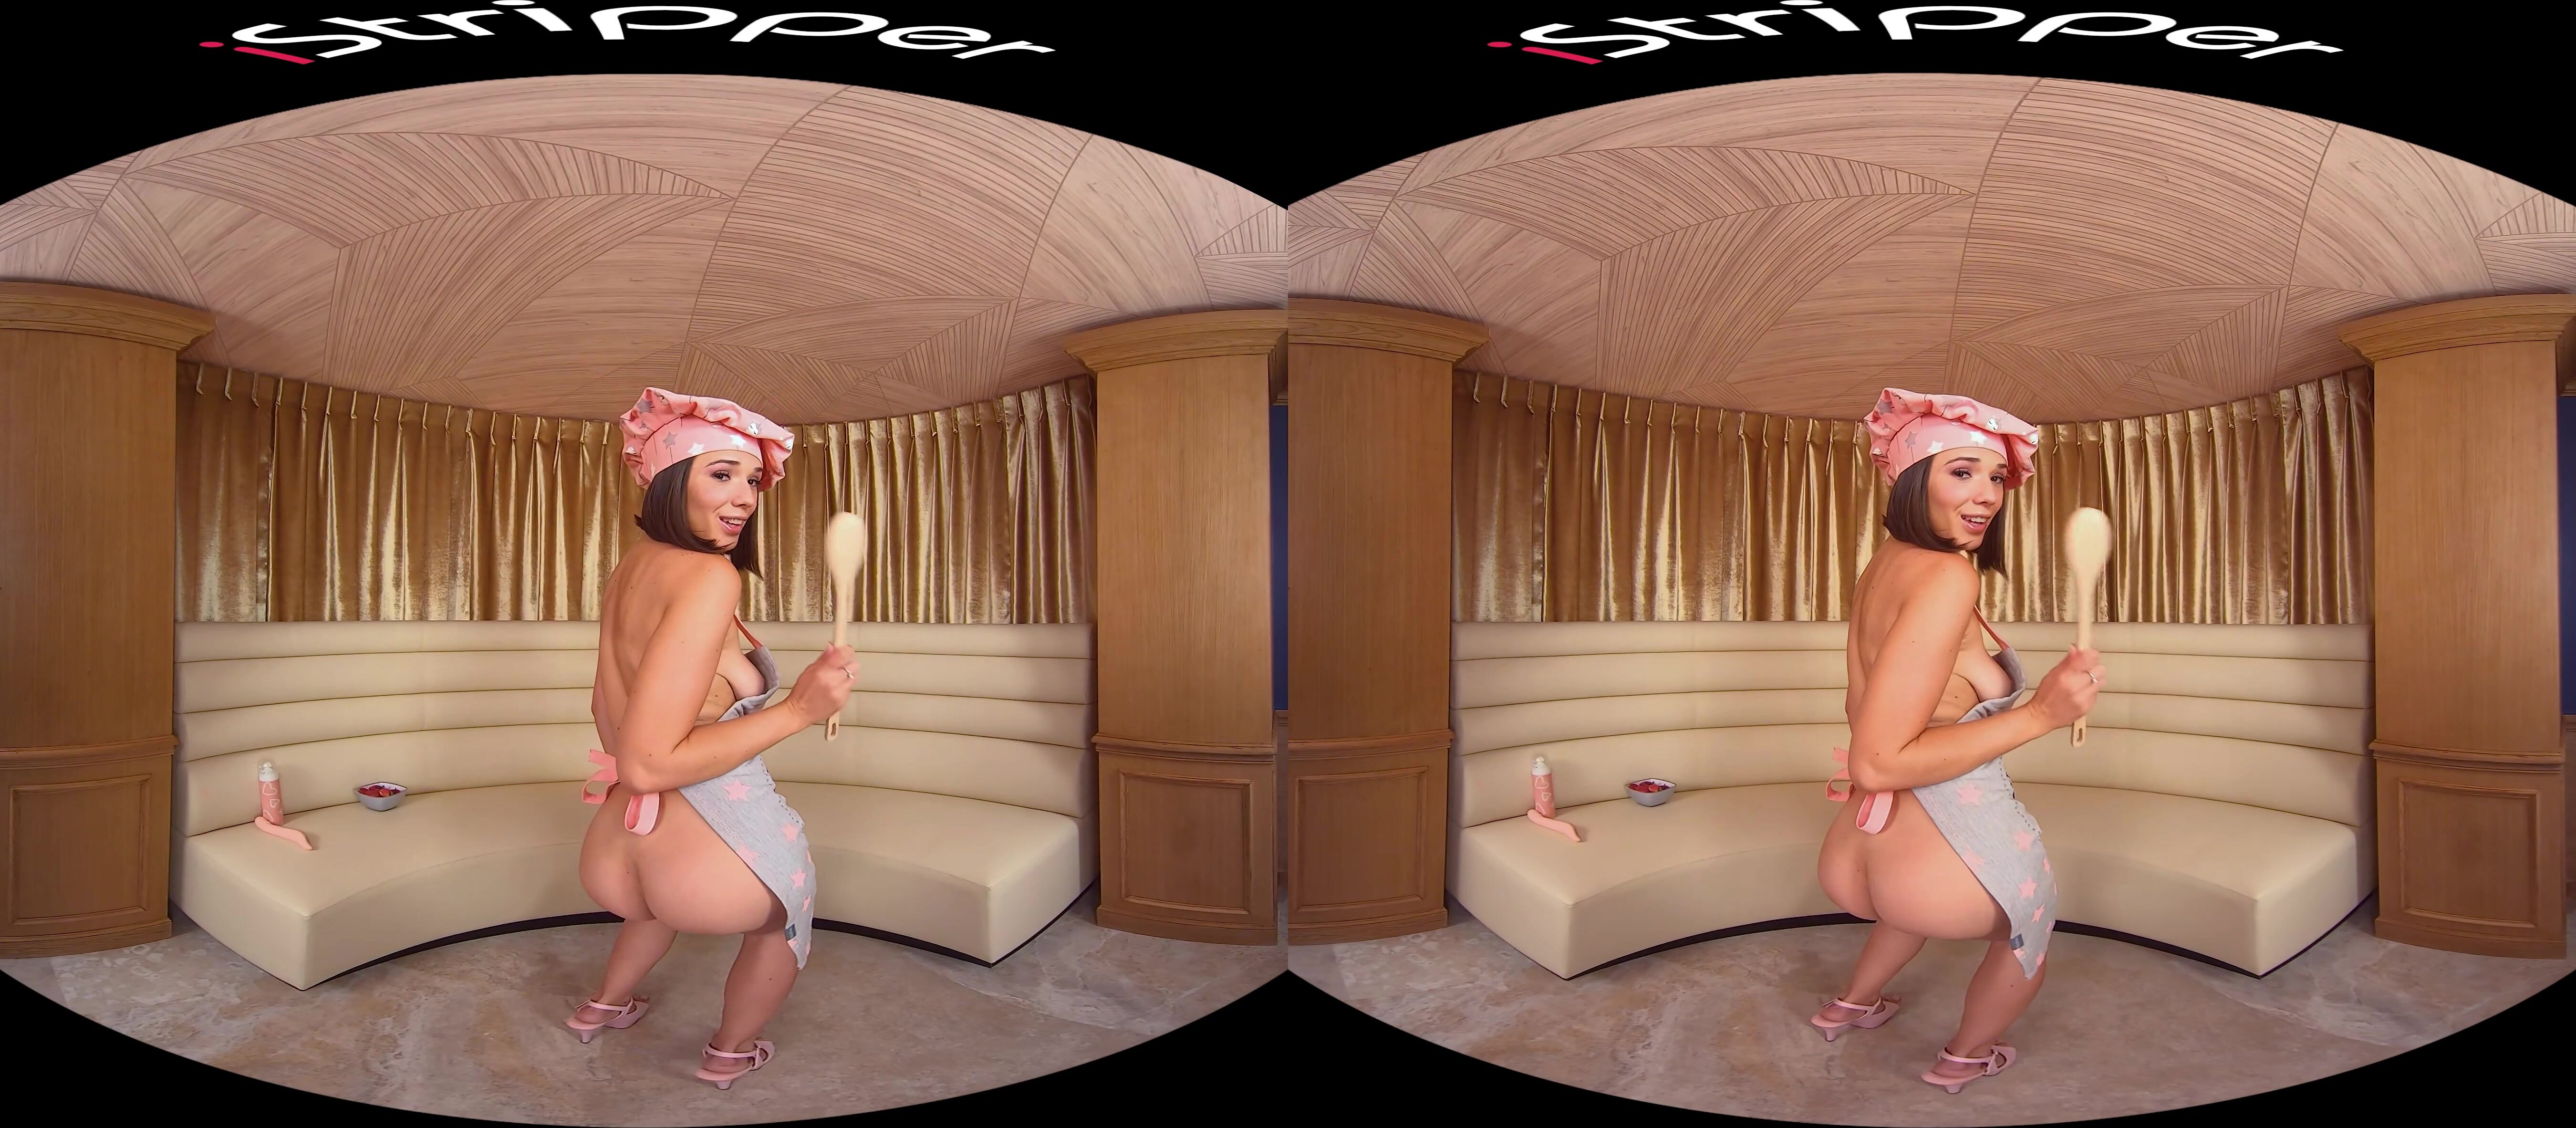 Eve Sweet - Istripper VR